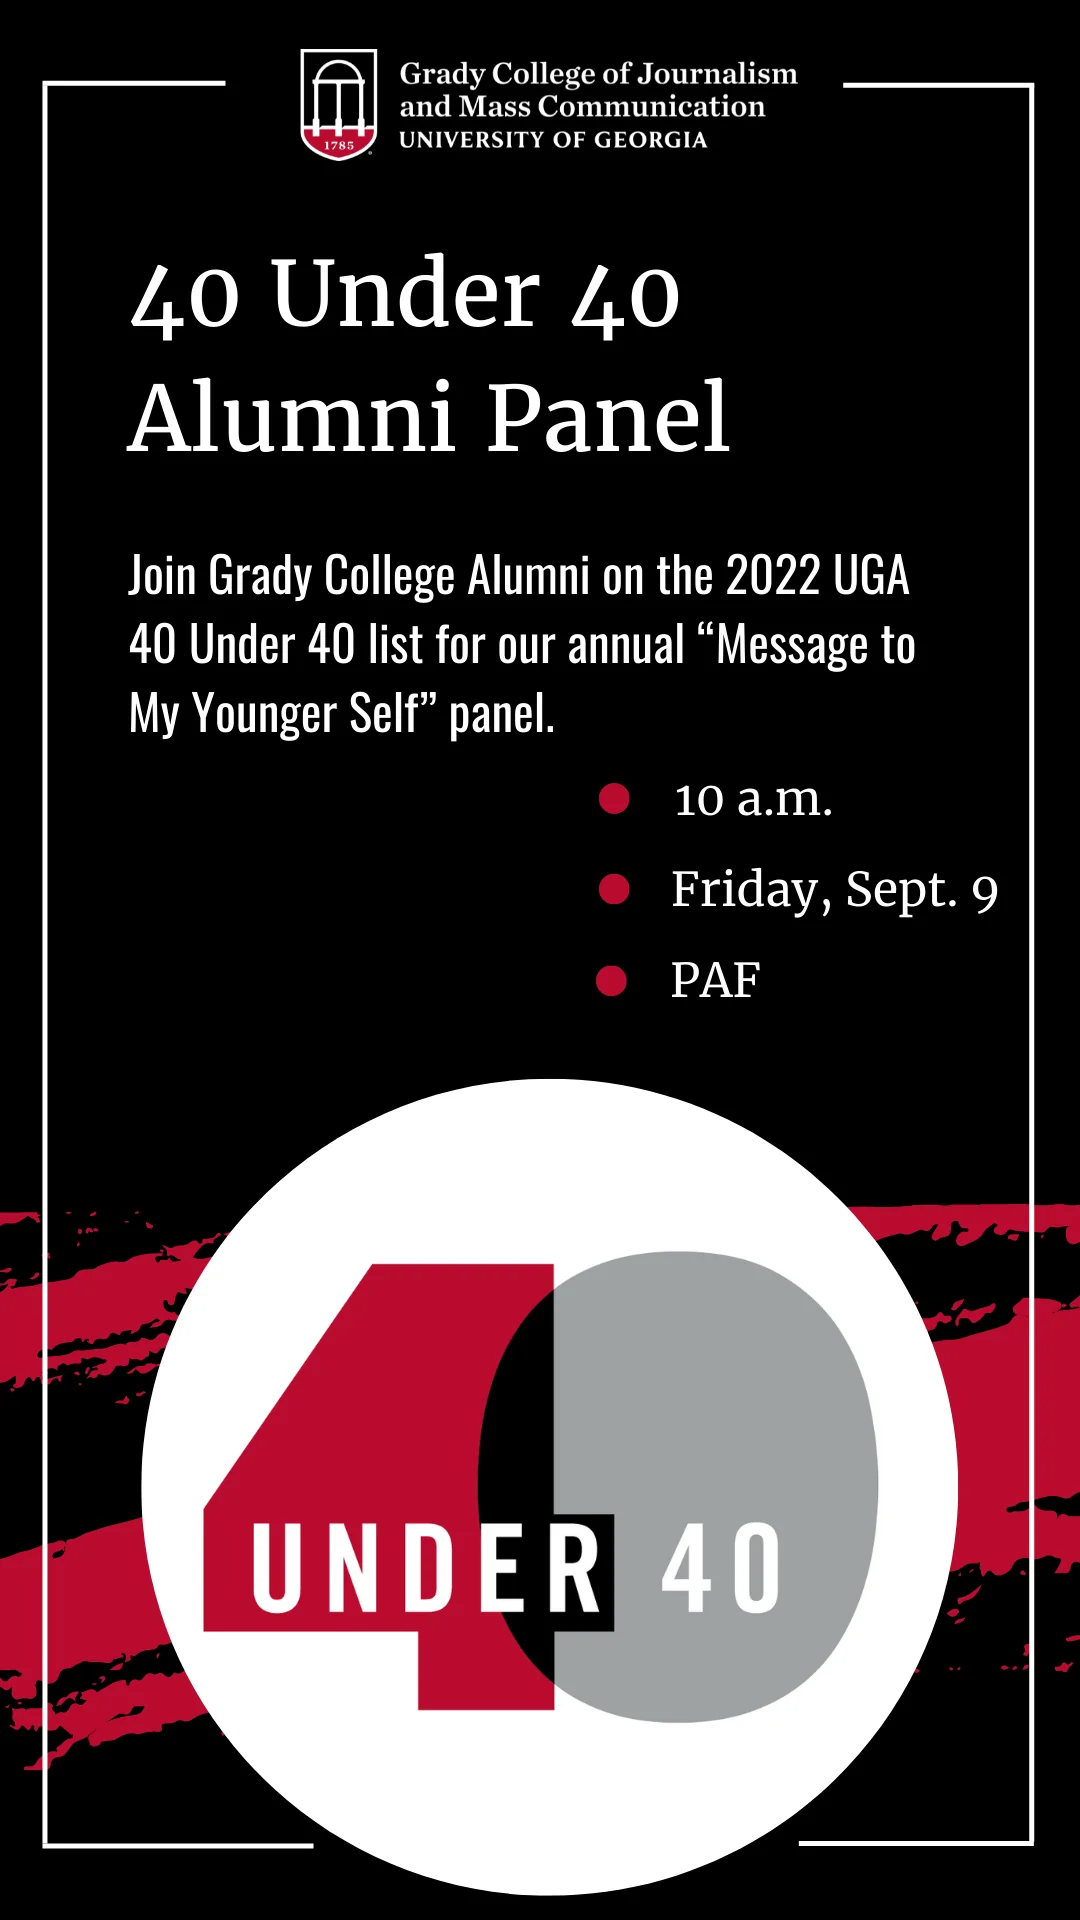 A graphic advertising Grady's 40 Under 40 alumni panel. 